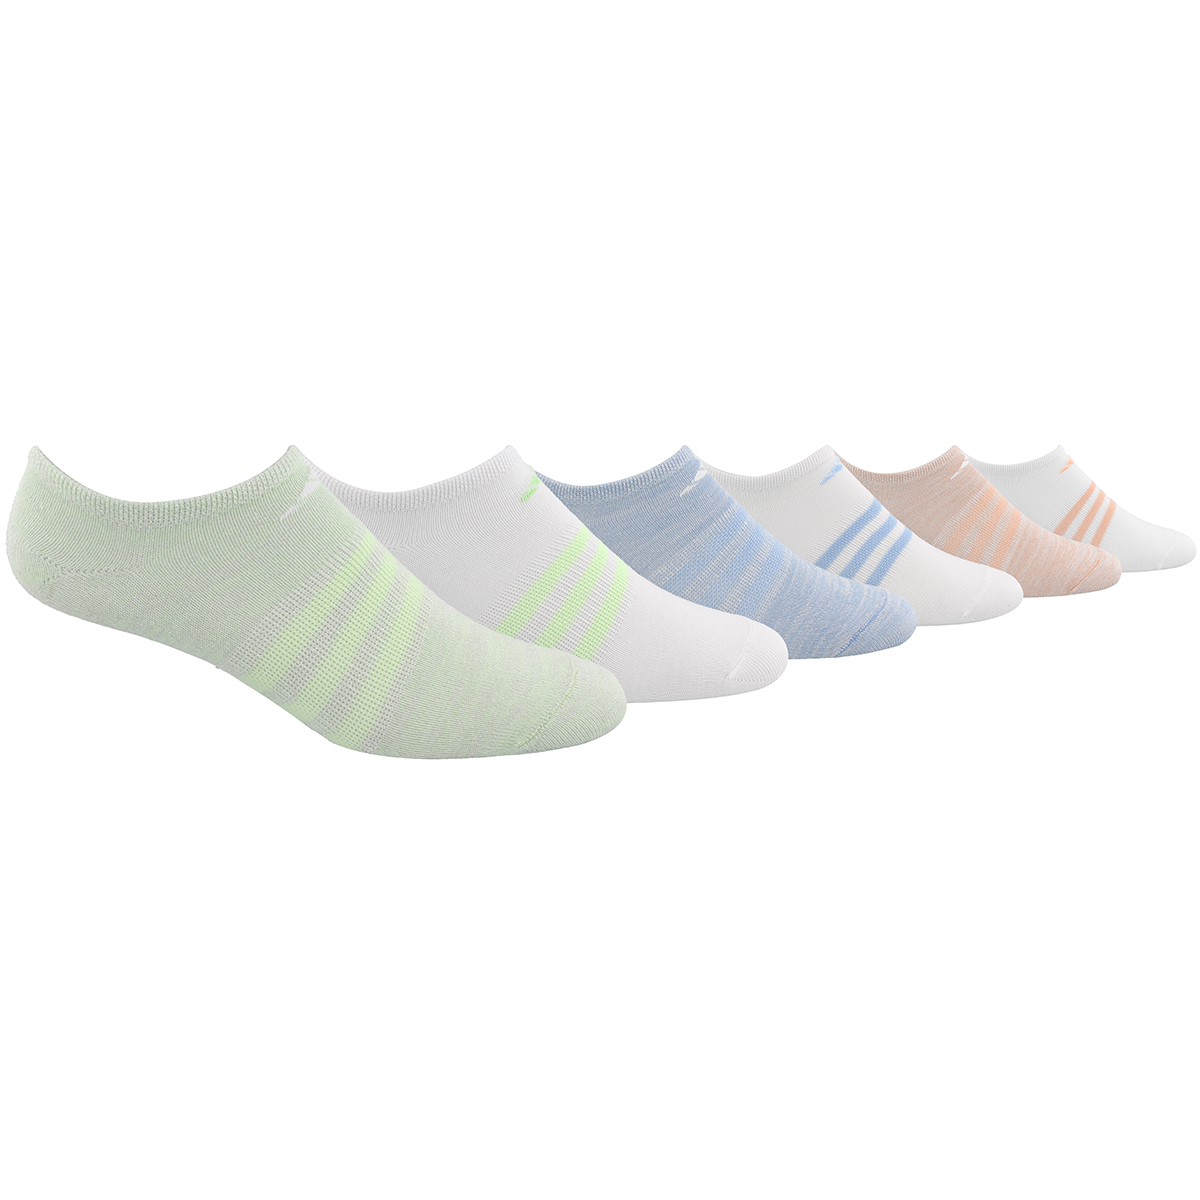 Adidas Girls' Climalite Superlite No-Show Socks, 6-Pack - Green, M